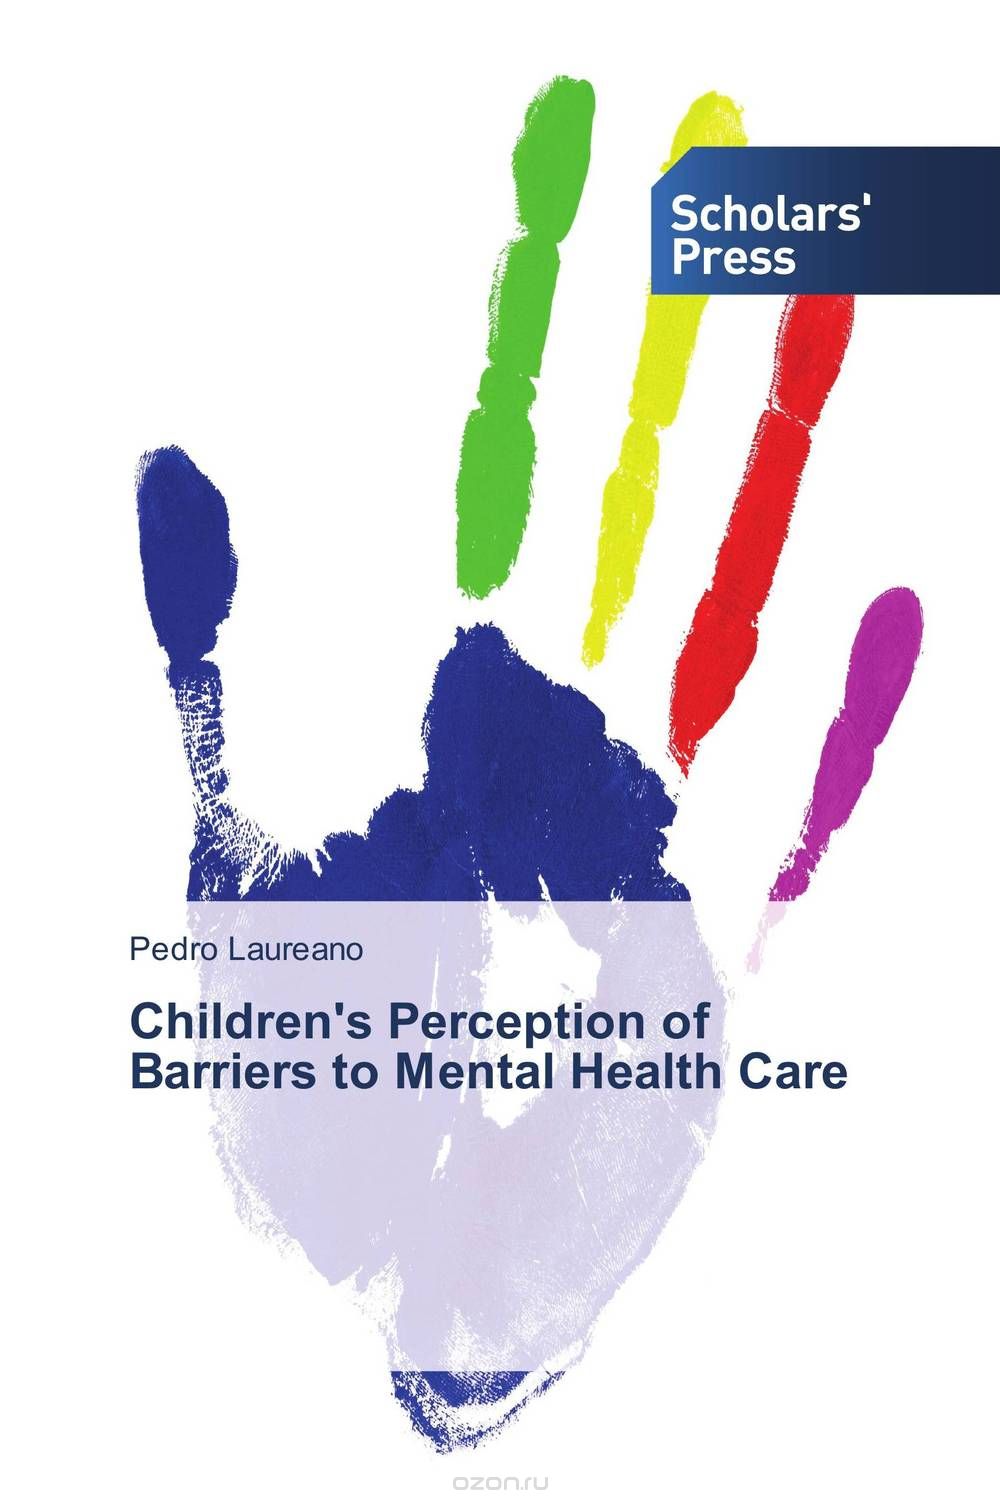 Скачать книгу "Children's Perception of Barriers to Mental Health Care"